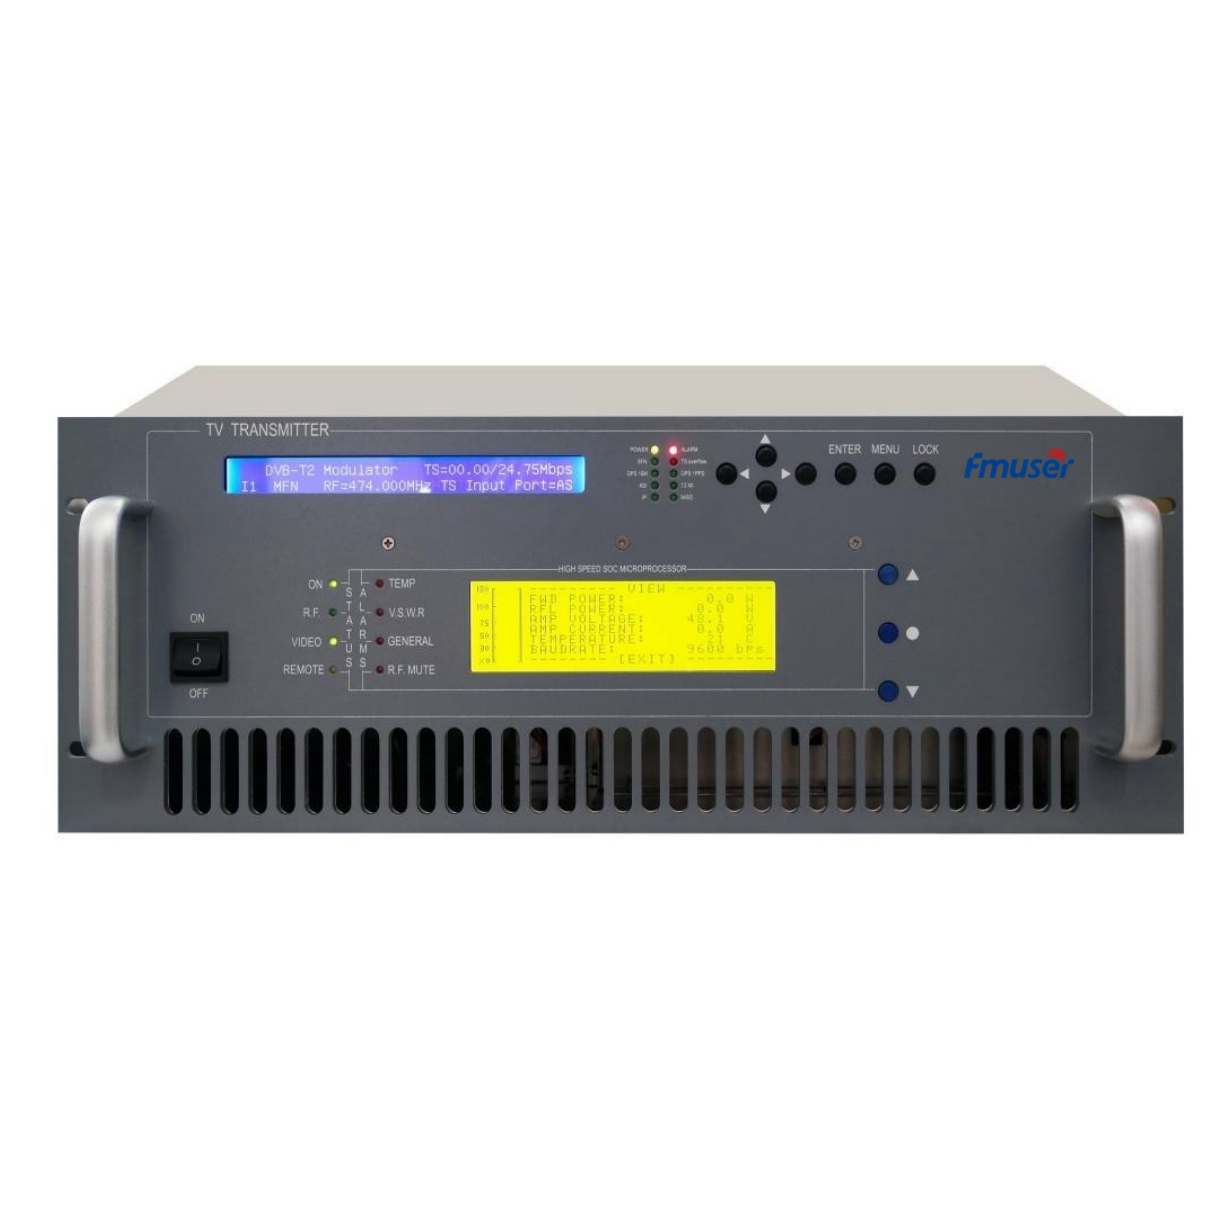 FMUSER FU518D-200W 200watt DVB-T թվային հեռուստատեսություն Տարածքային հեռարձակում հաղորդիչ Հեռուստատեսություն Numerique Terrestre TNT (DVB-T / ATSC / ISDB-T) պրոֆեսիոնալ հեռուստաընկերության համար